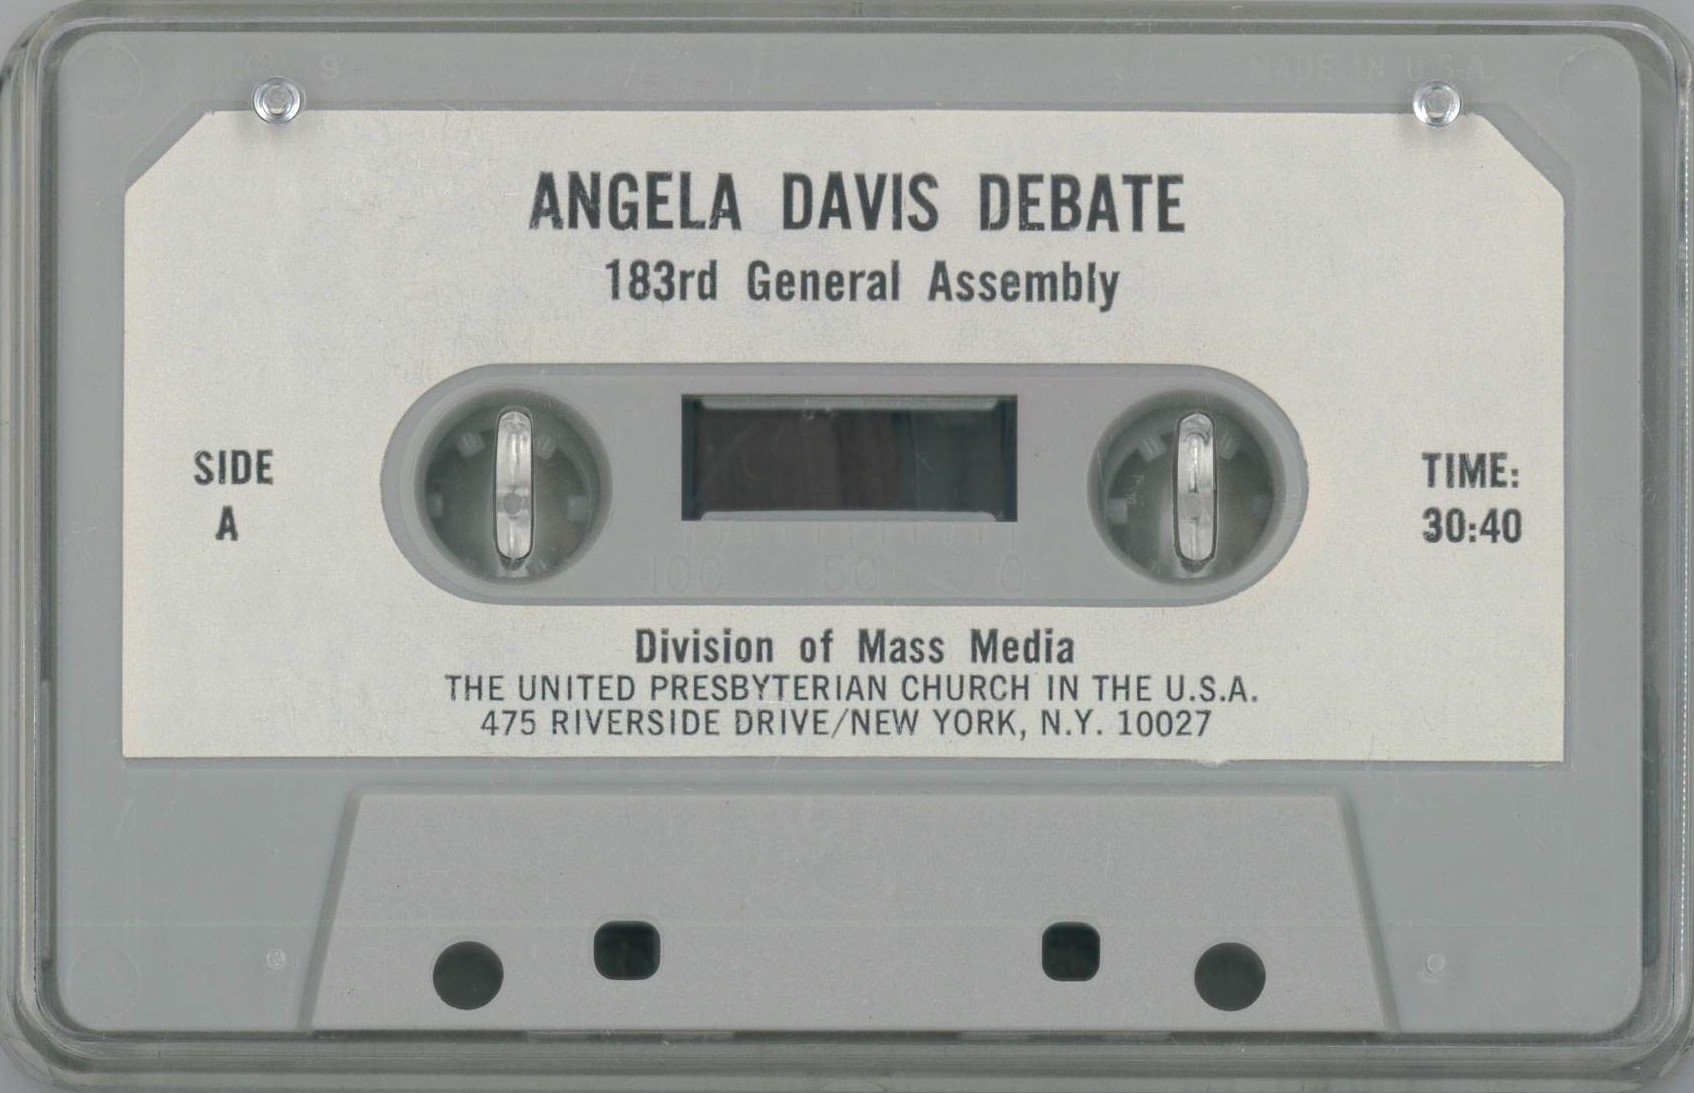 Angela Davis debate, 183rd General Assembly, 1971, side A.